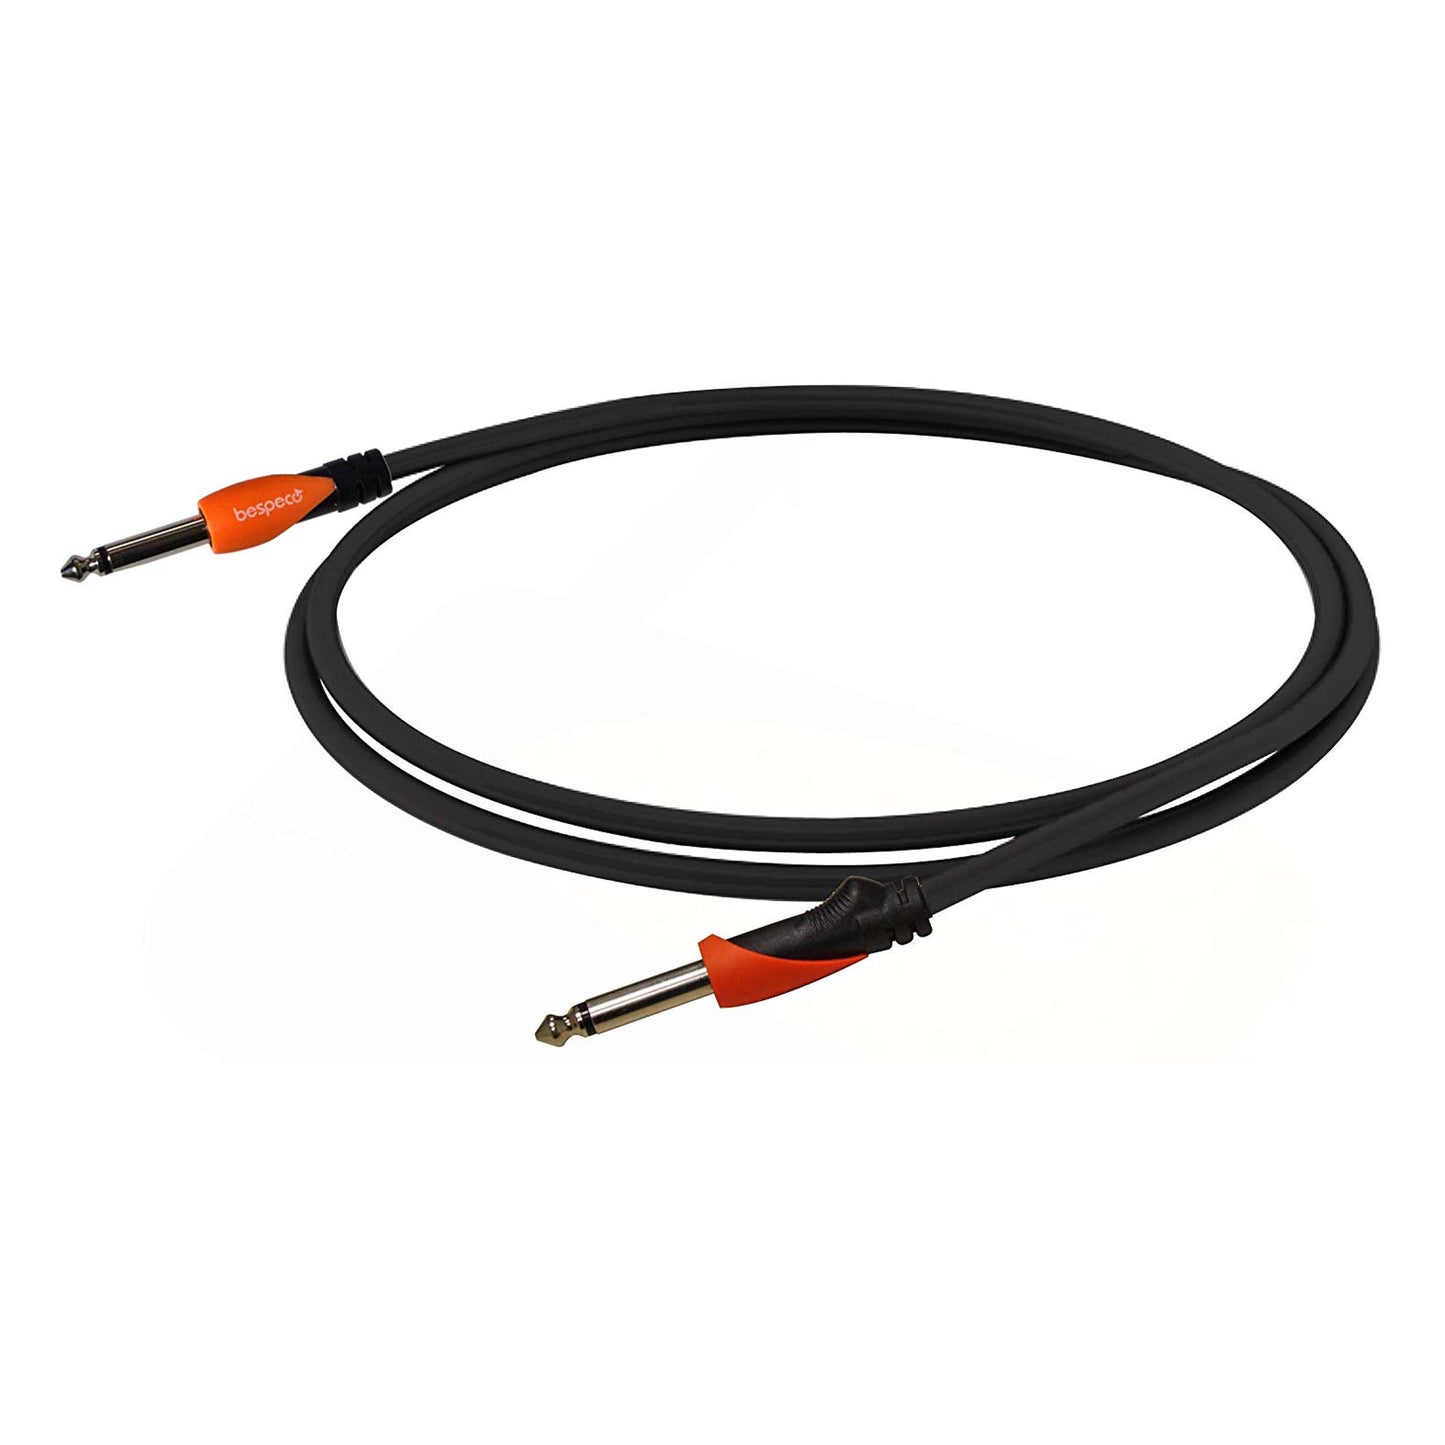 Bespeco Instrument Cable Black & Orange 9.8 Feet SLJJ300